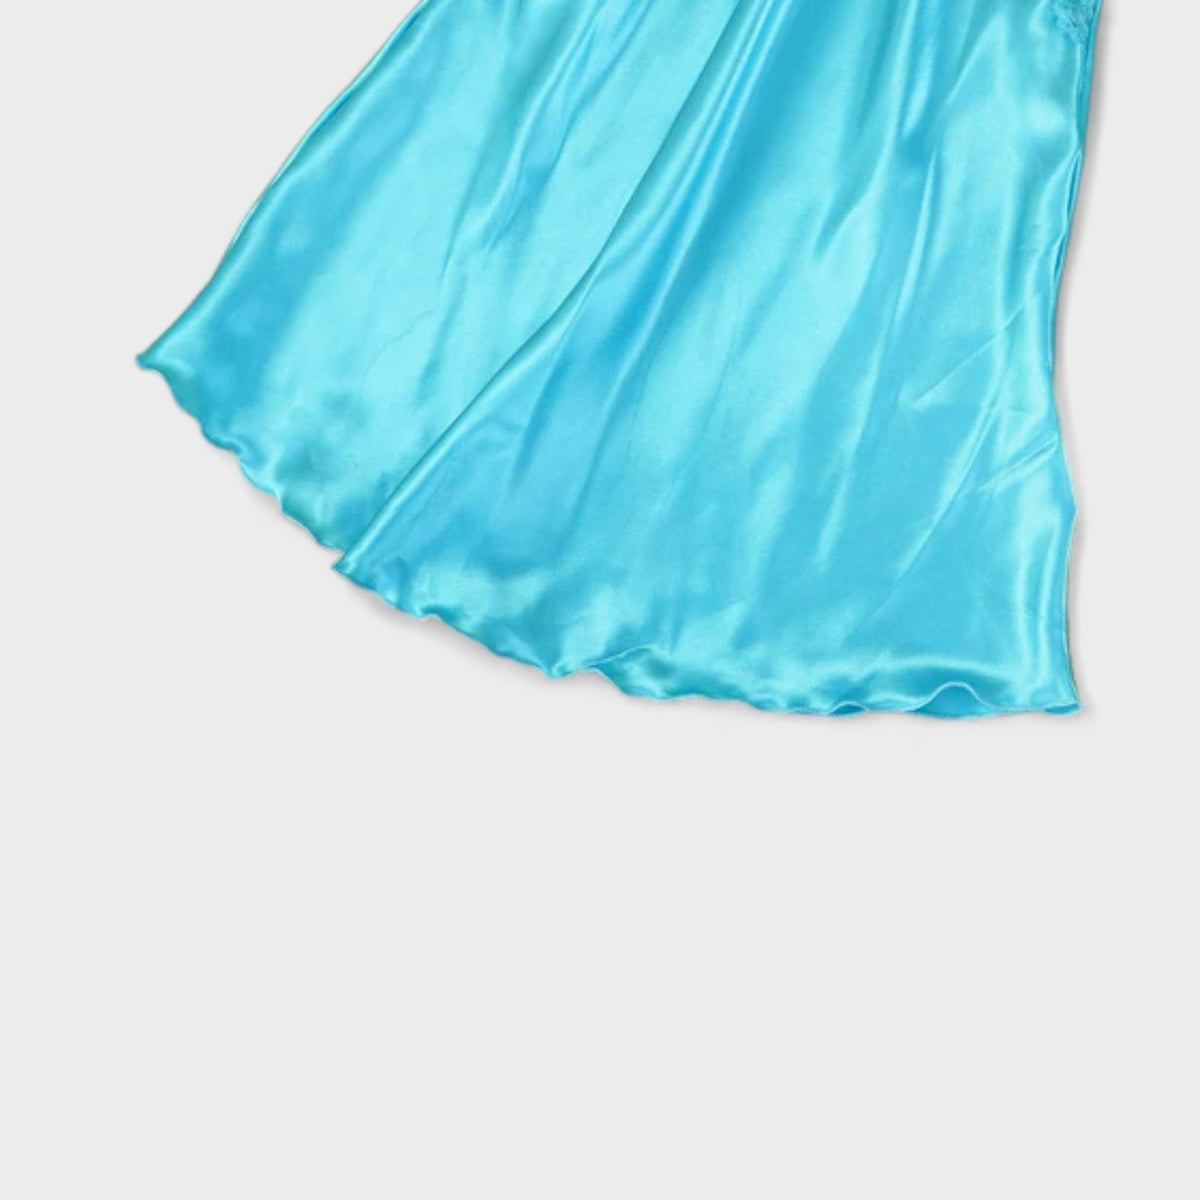 Fond de robe bleu ciel detail